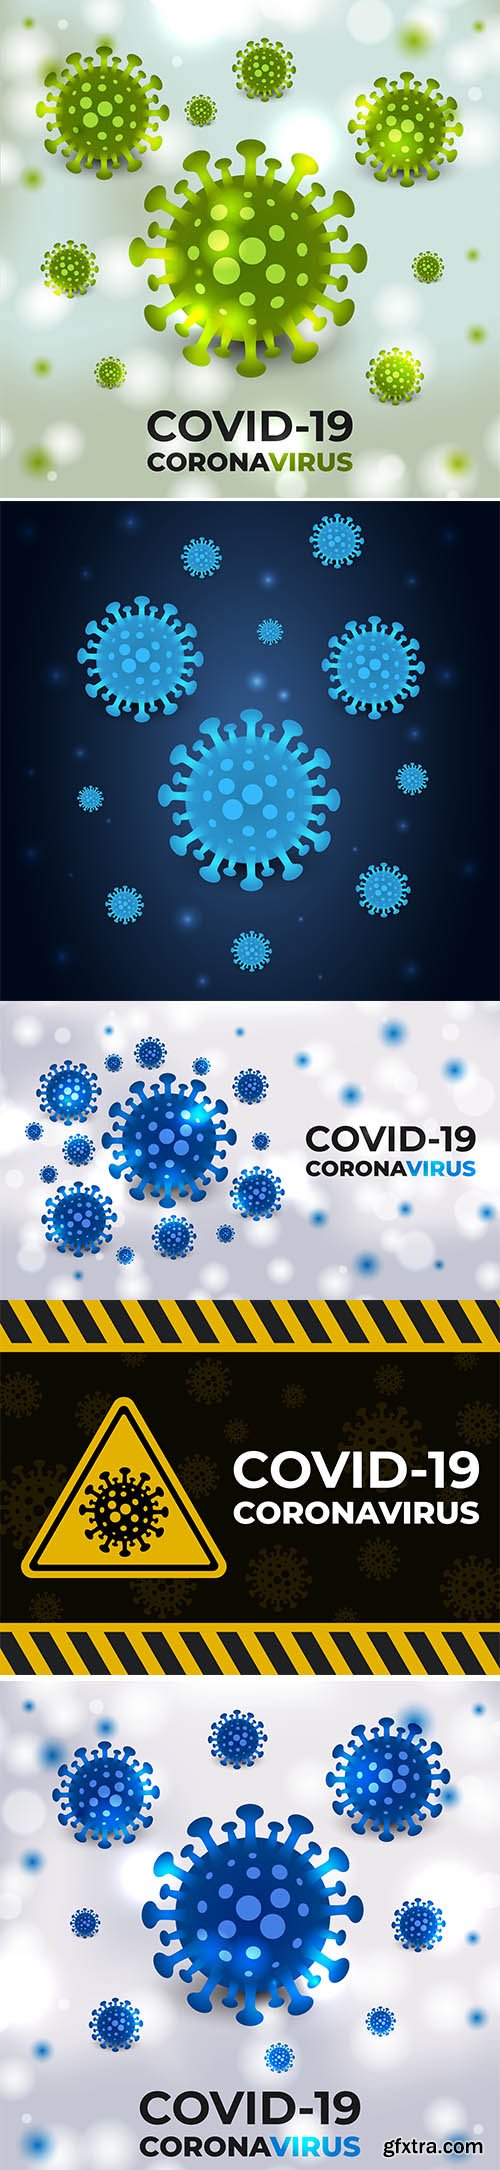 Covid-19 Coronavirus Medical Background